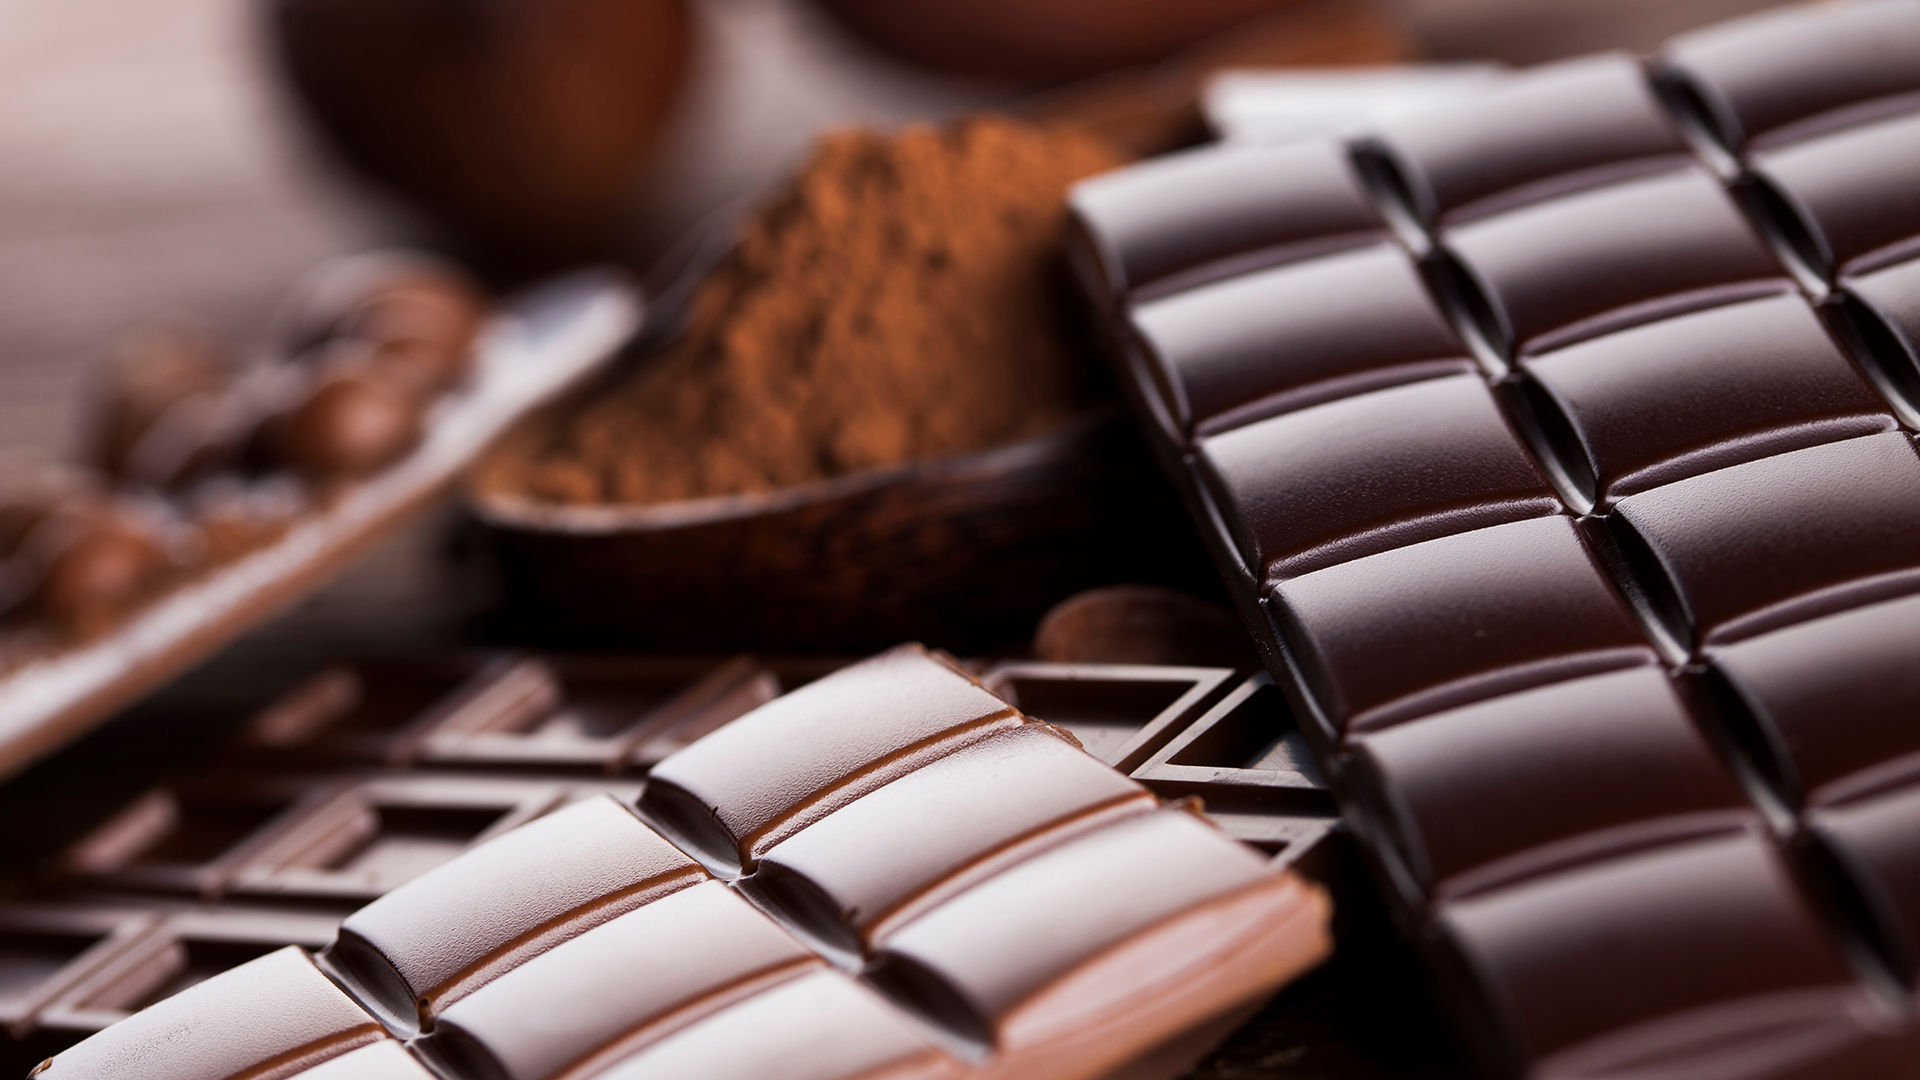 Selection of chocolate bars